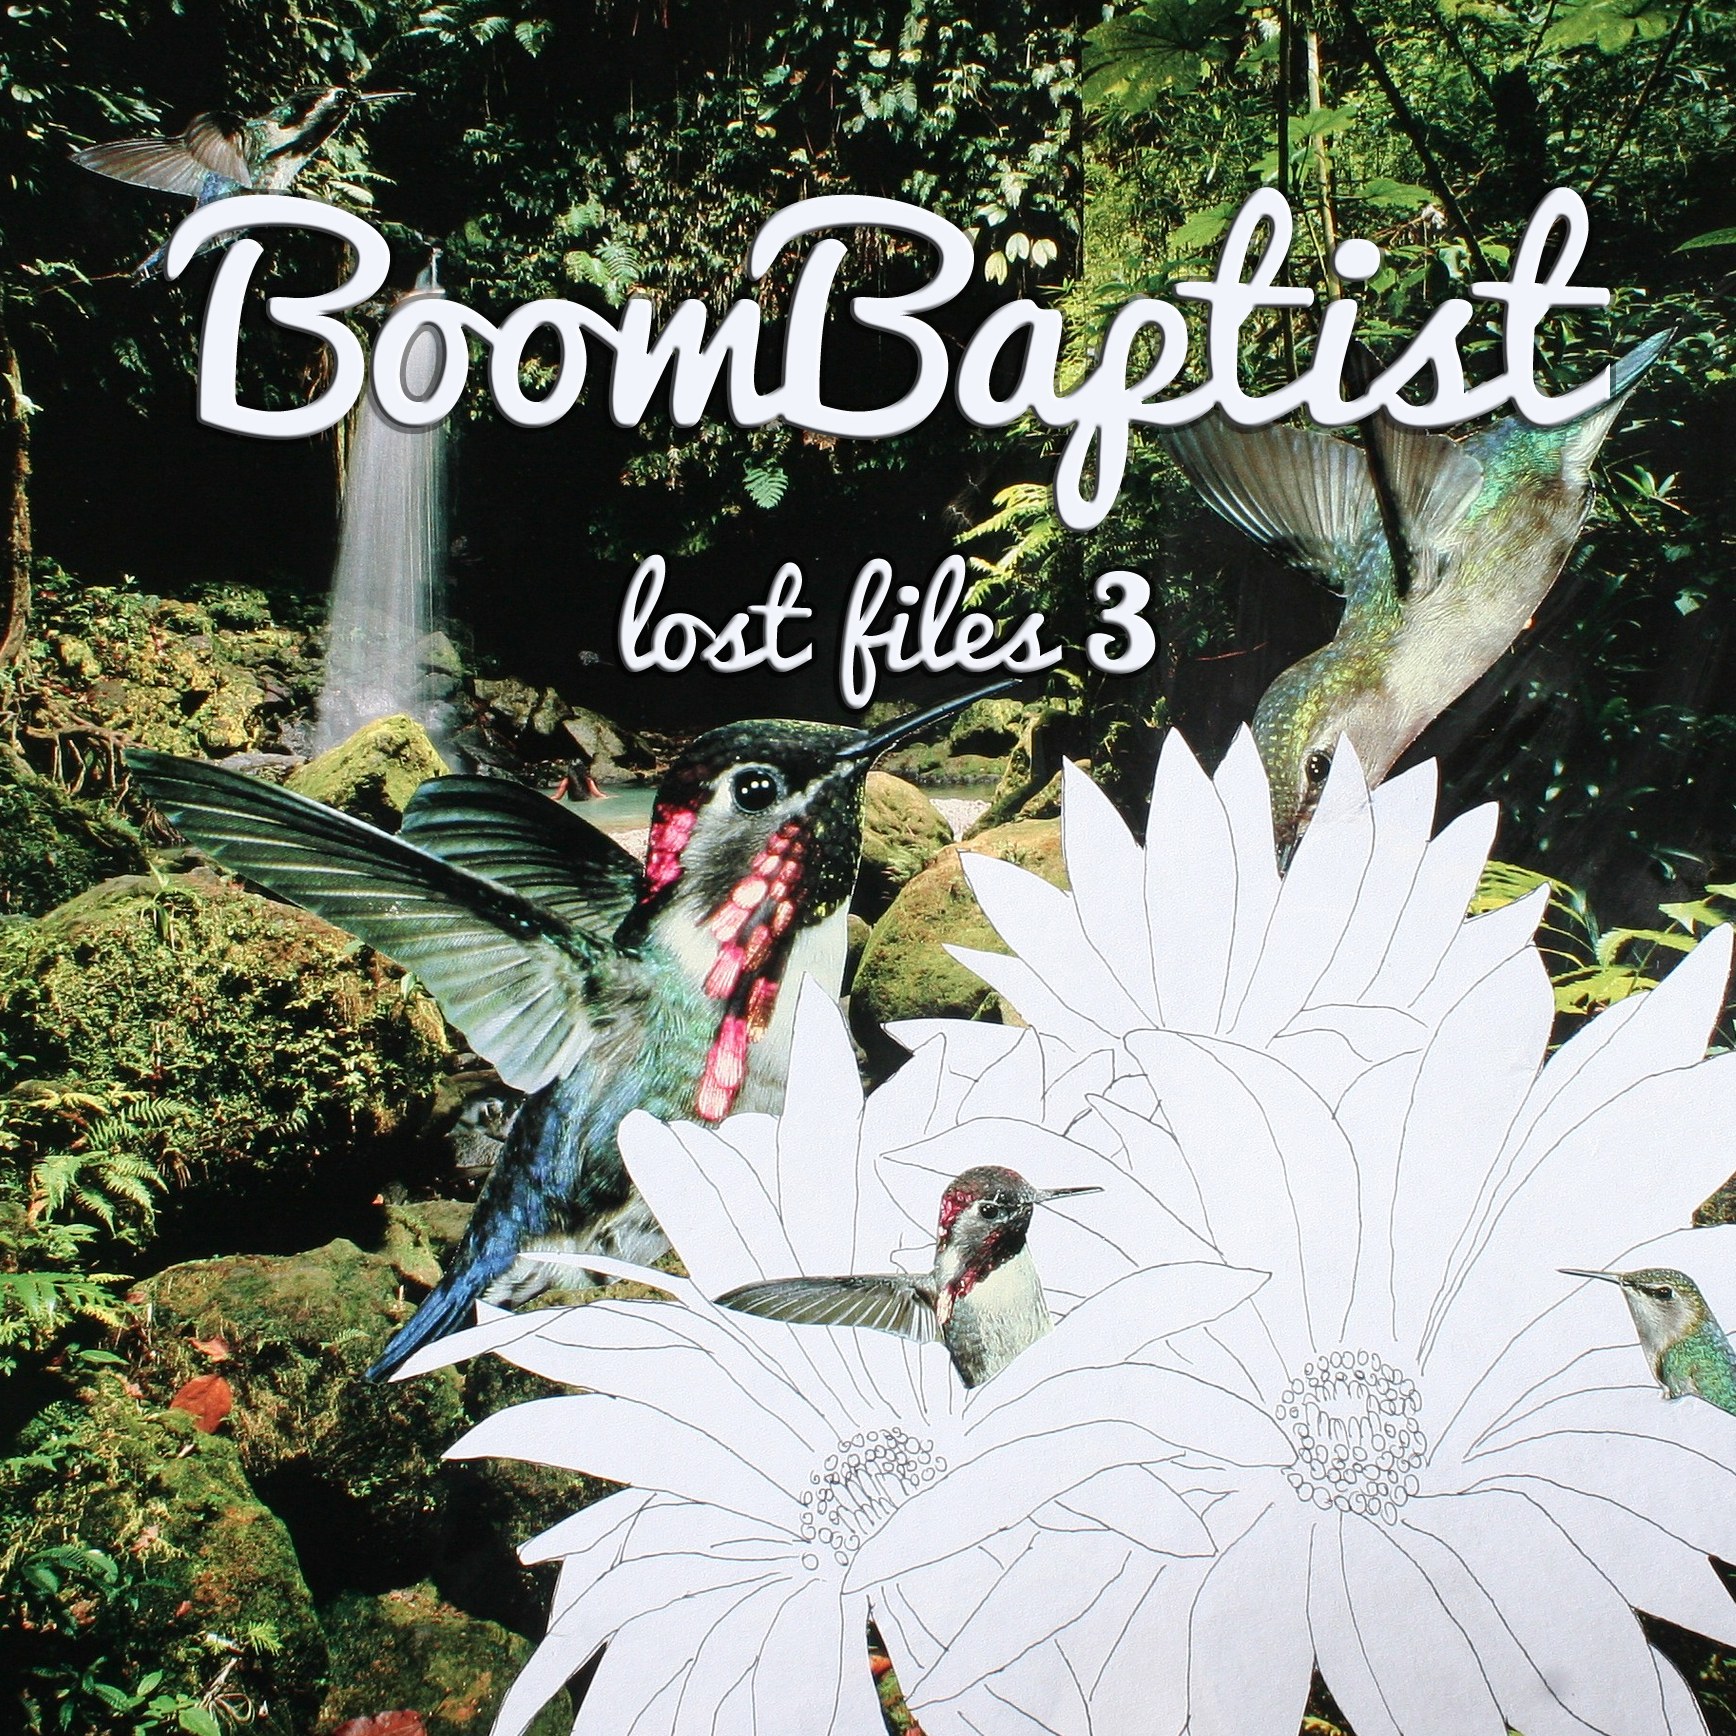 Free Download: BoomBaptist – The Lost Files Vol. 3